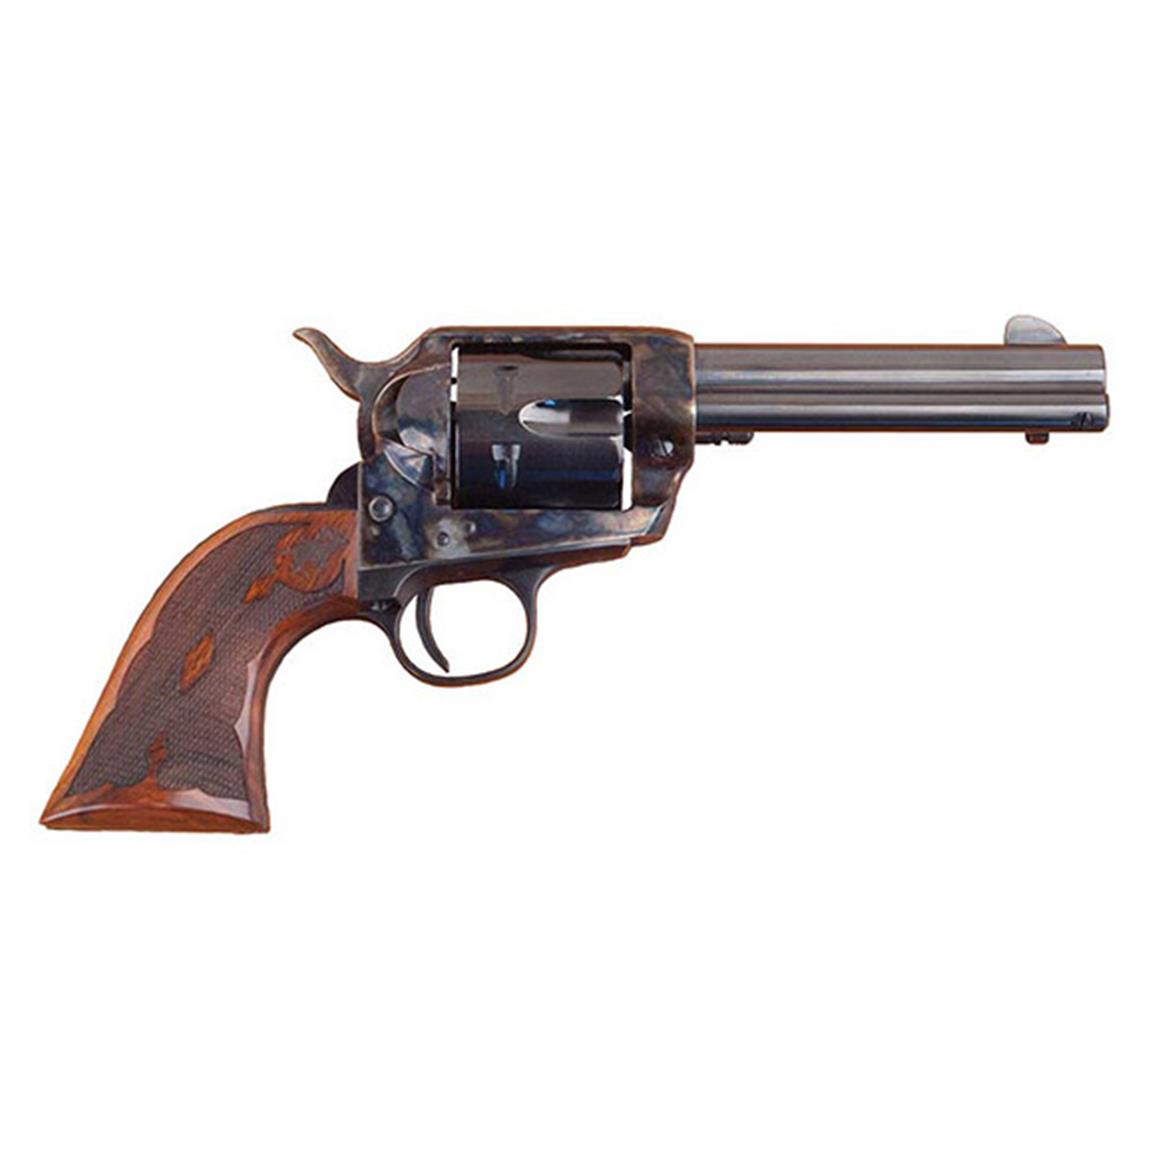 Cimarron Firearms Co. Pietta Eliminator C, Revolver, .357 Magnum, 4.75" Barrel, 6 Rounds